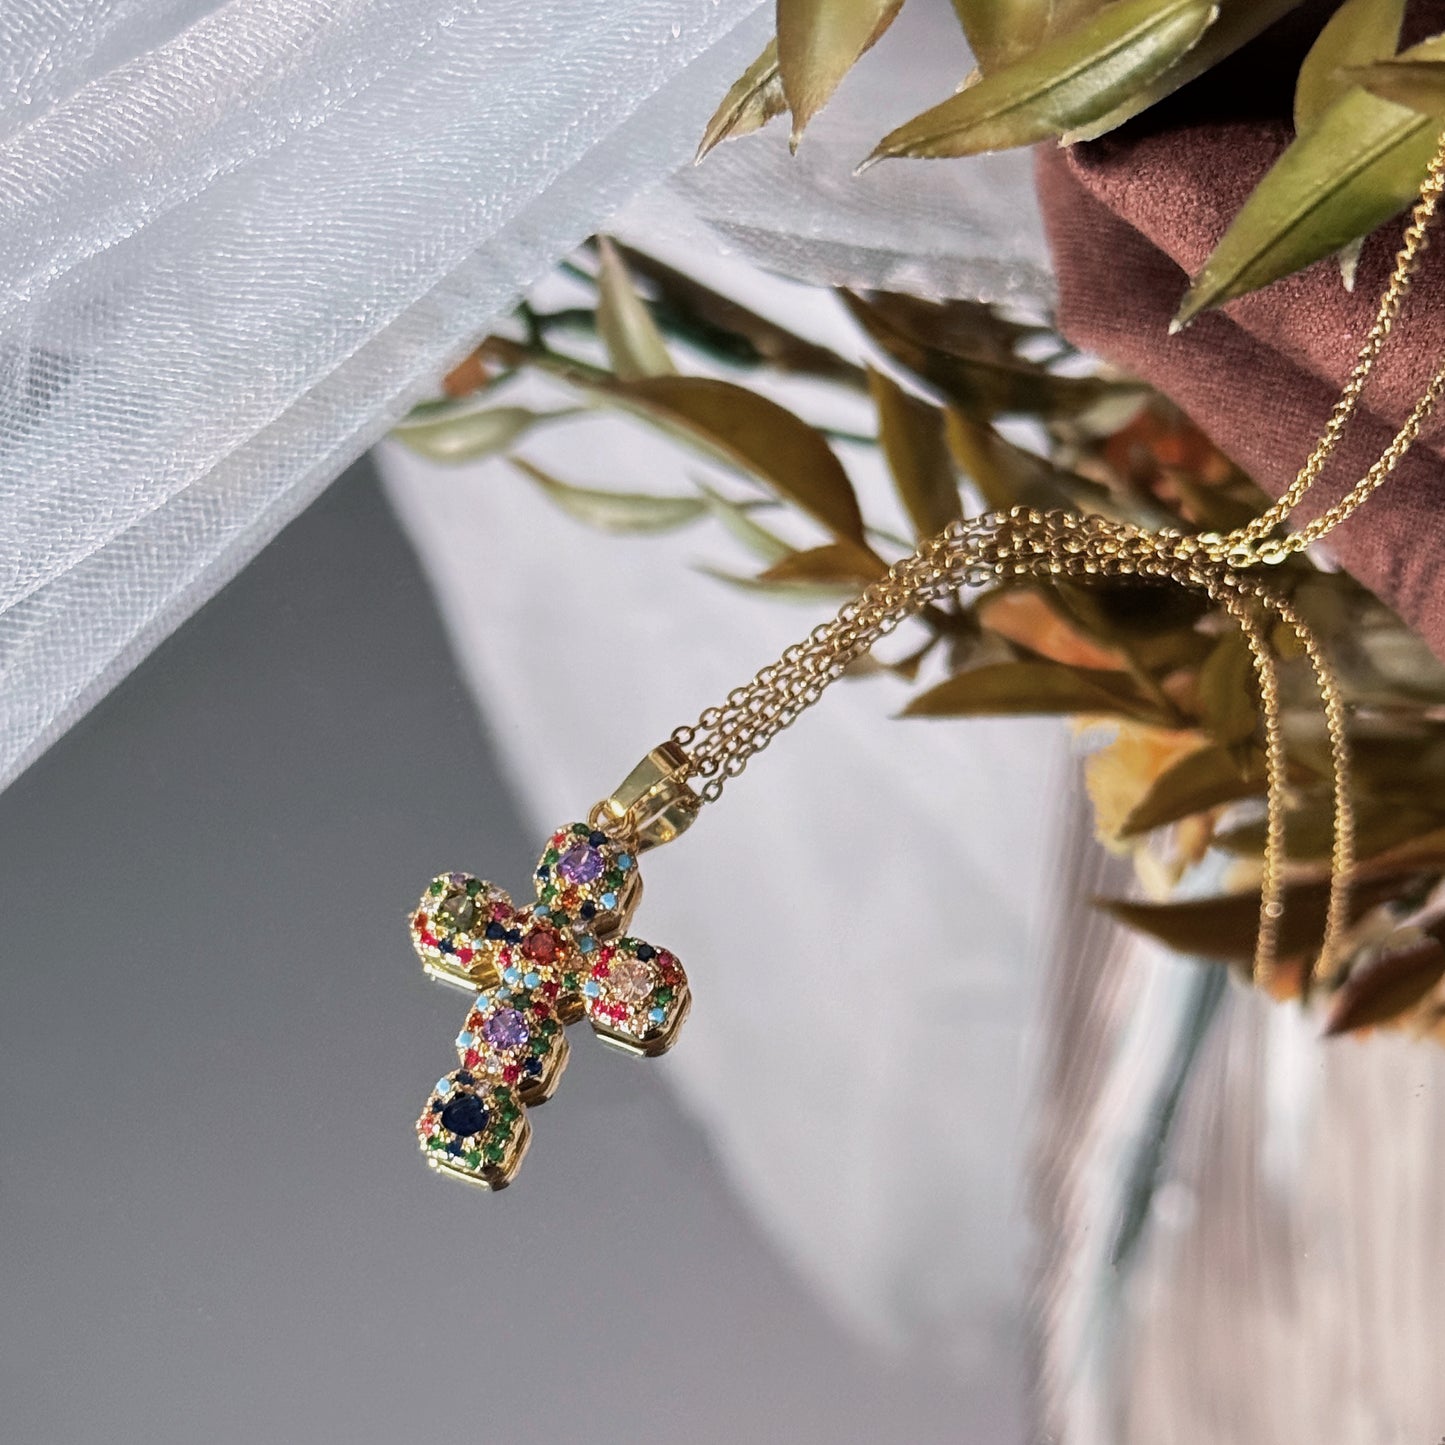 Colorful Creative Cross Pendant Necklace